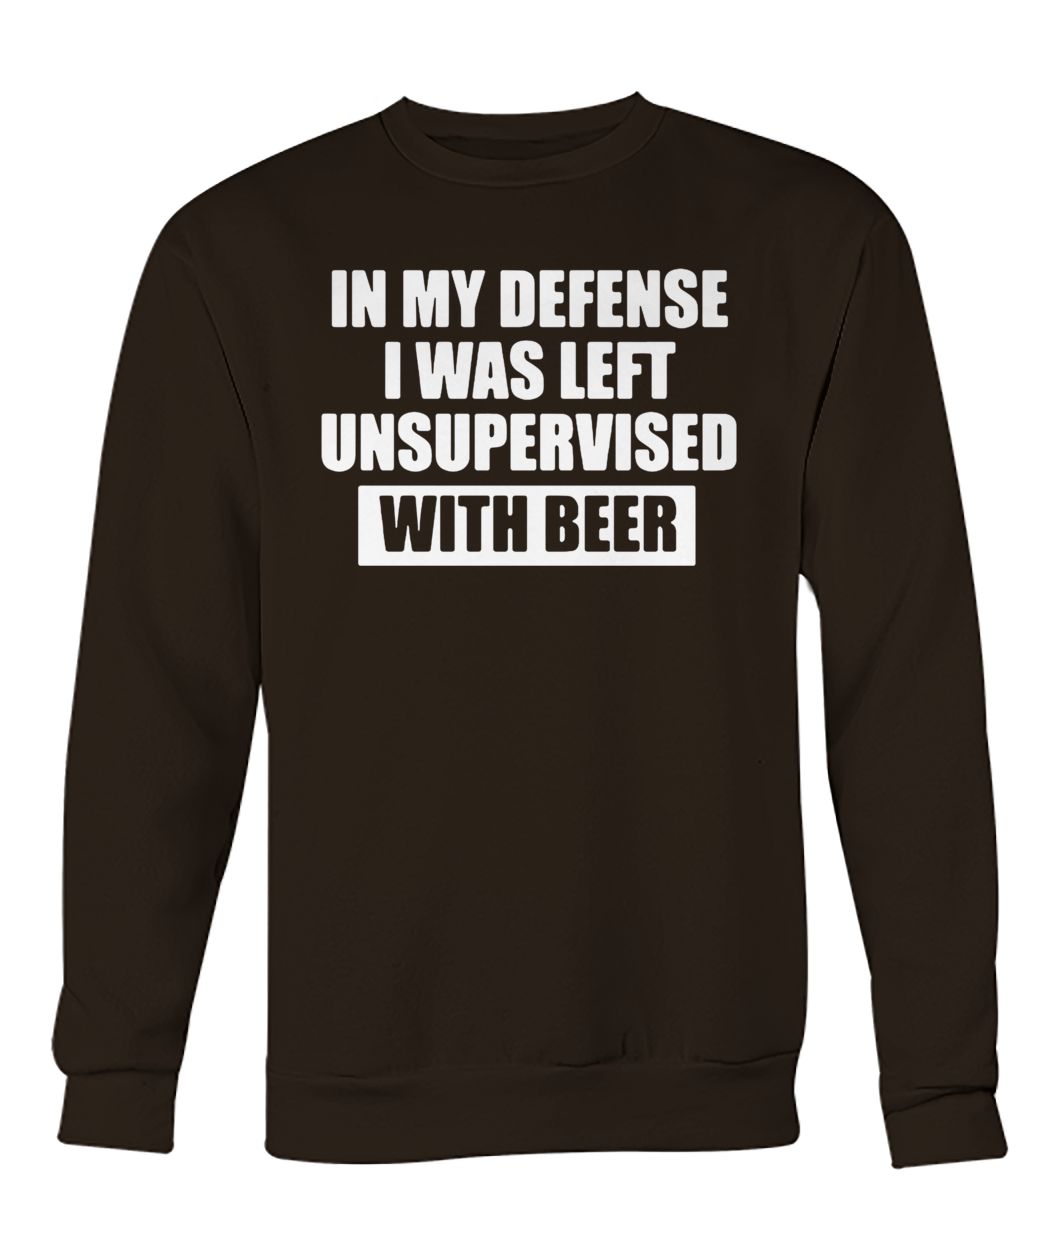 In my defense I was left unsupervised with beer crew neck sweatshirt